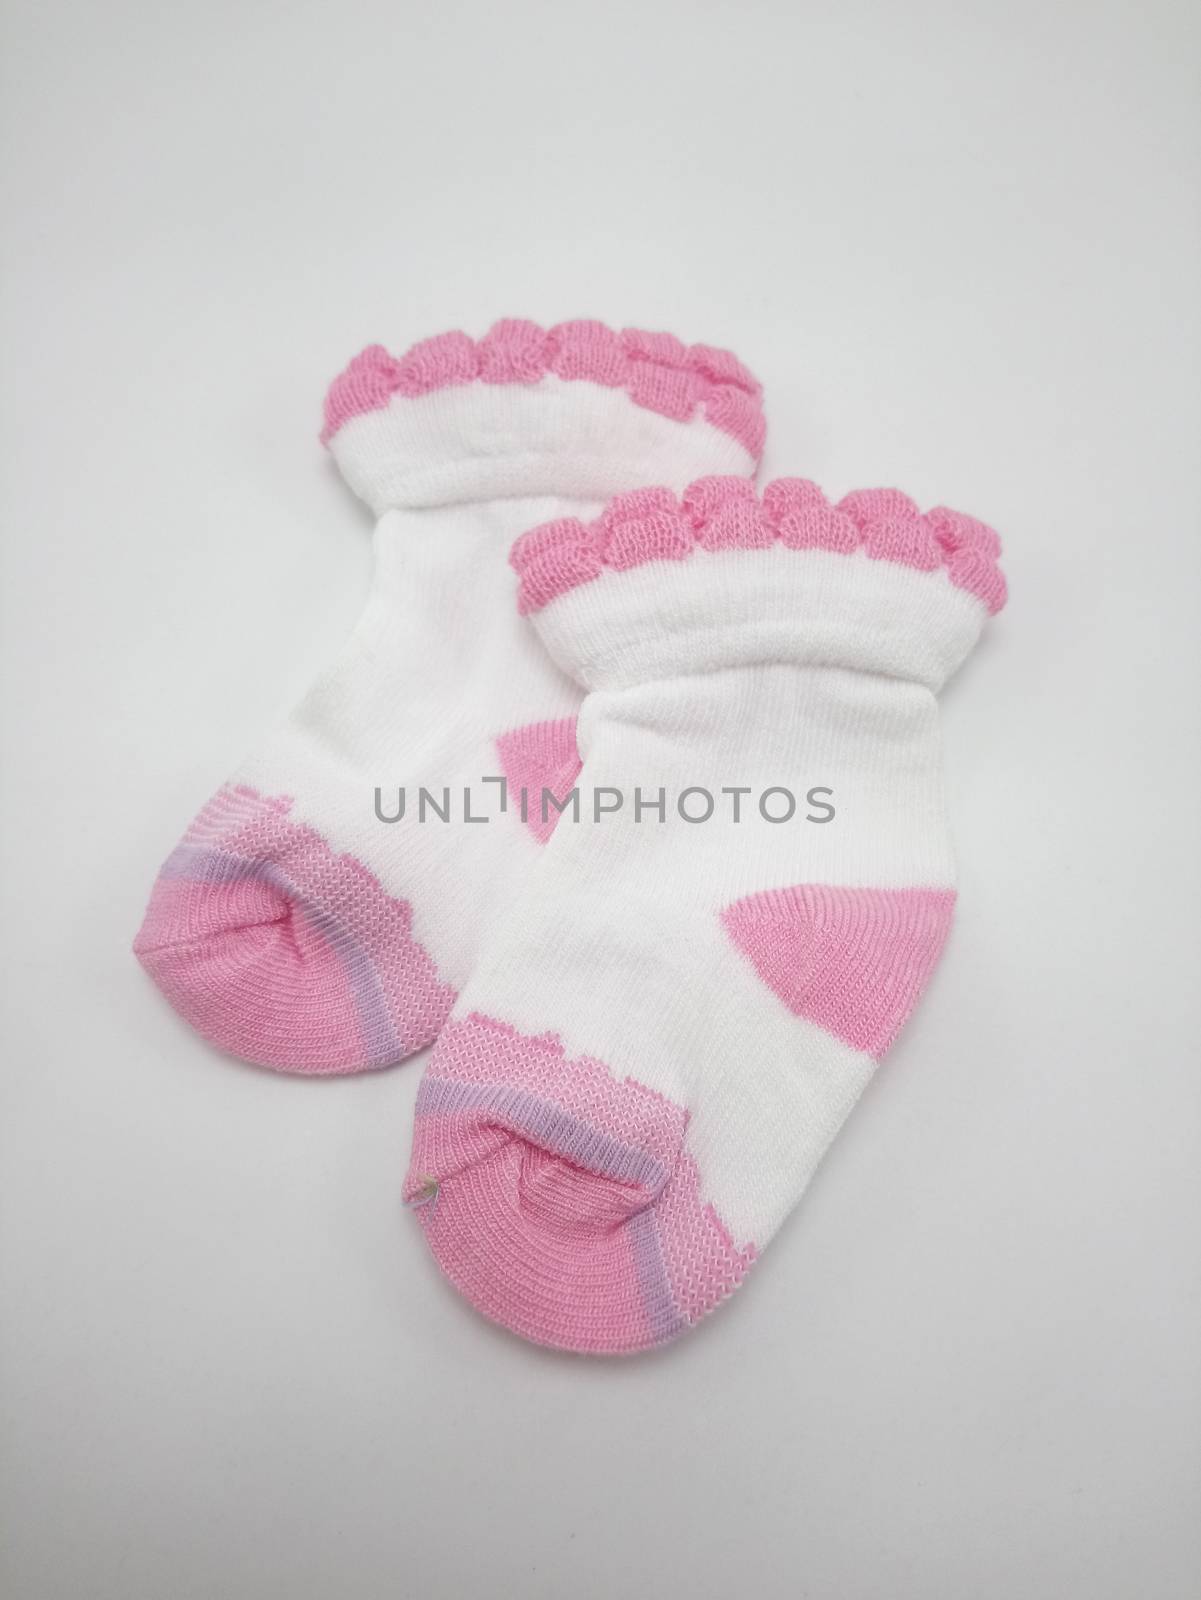 Antibacterial baby socks pink print use to wear in the feet